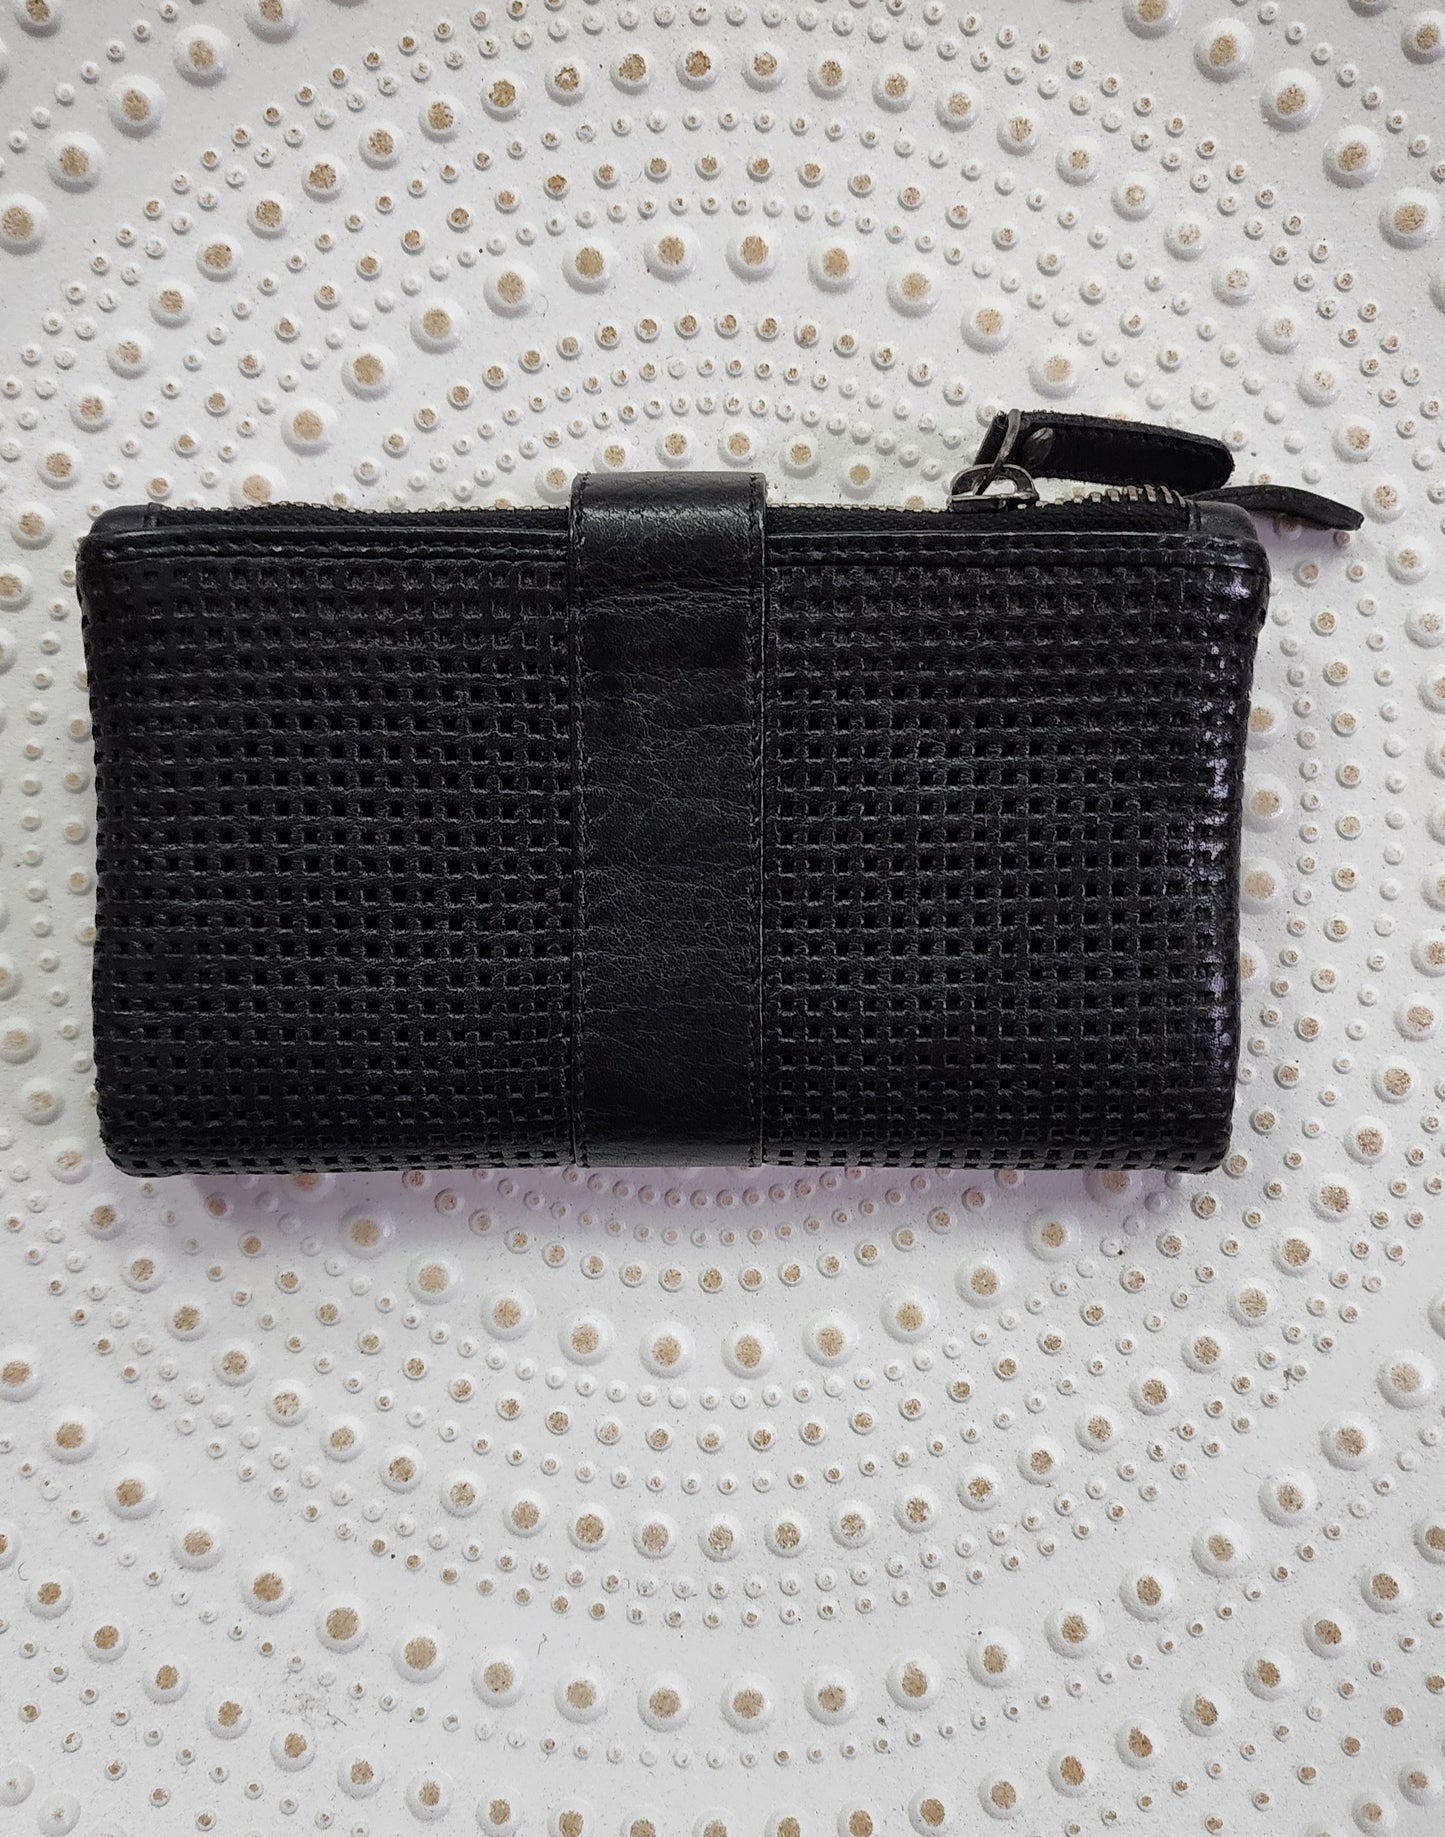 Leather wallet- Black mesh